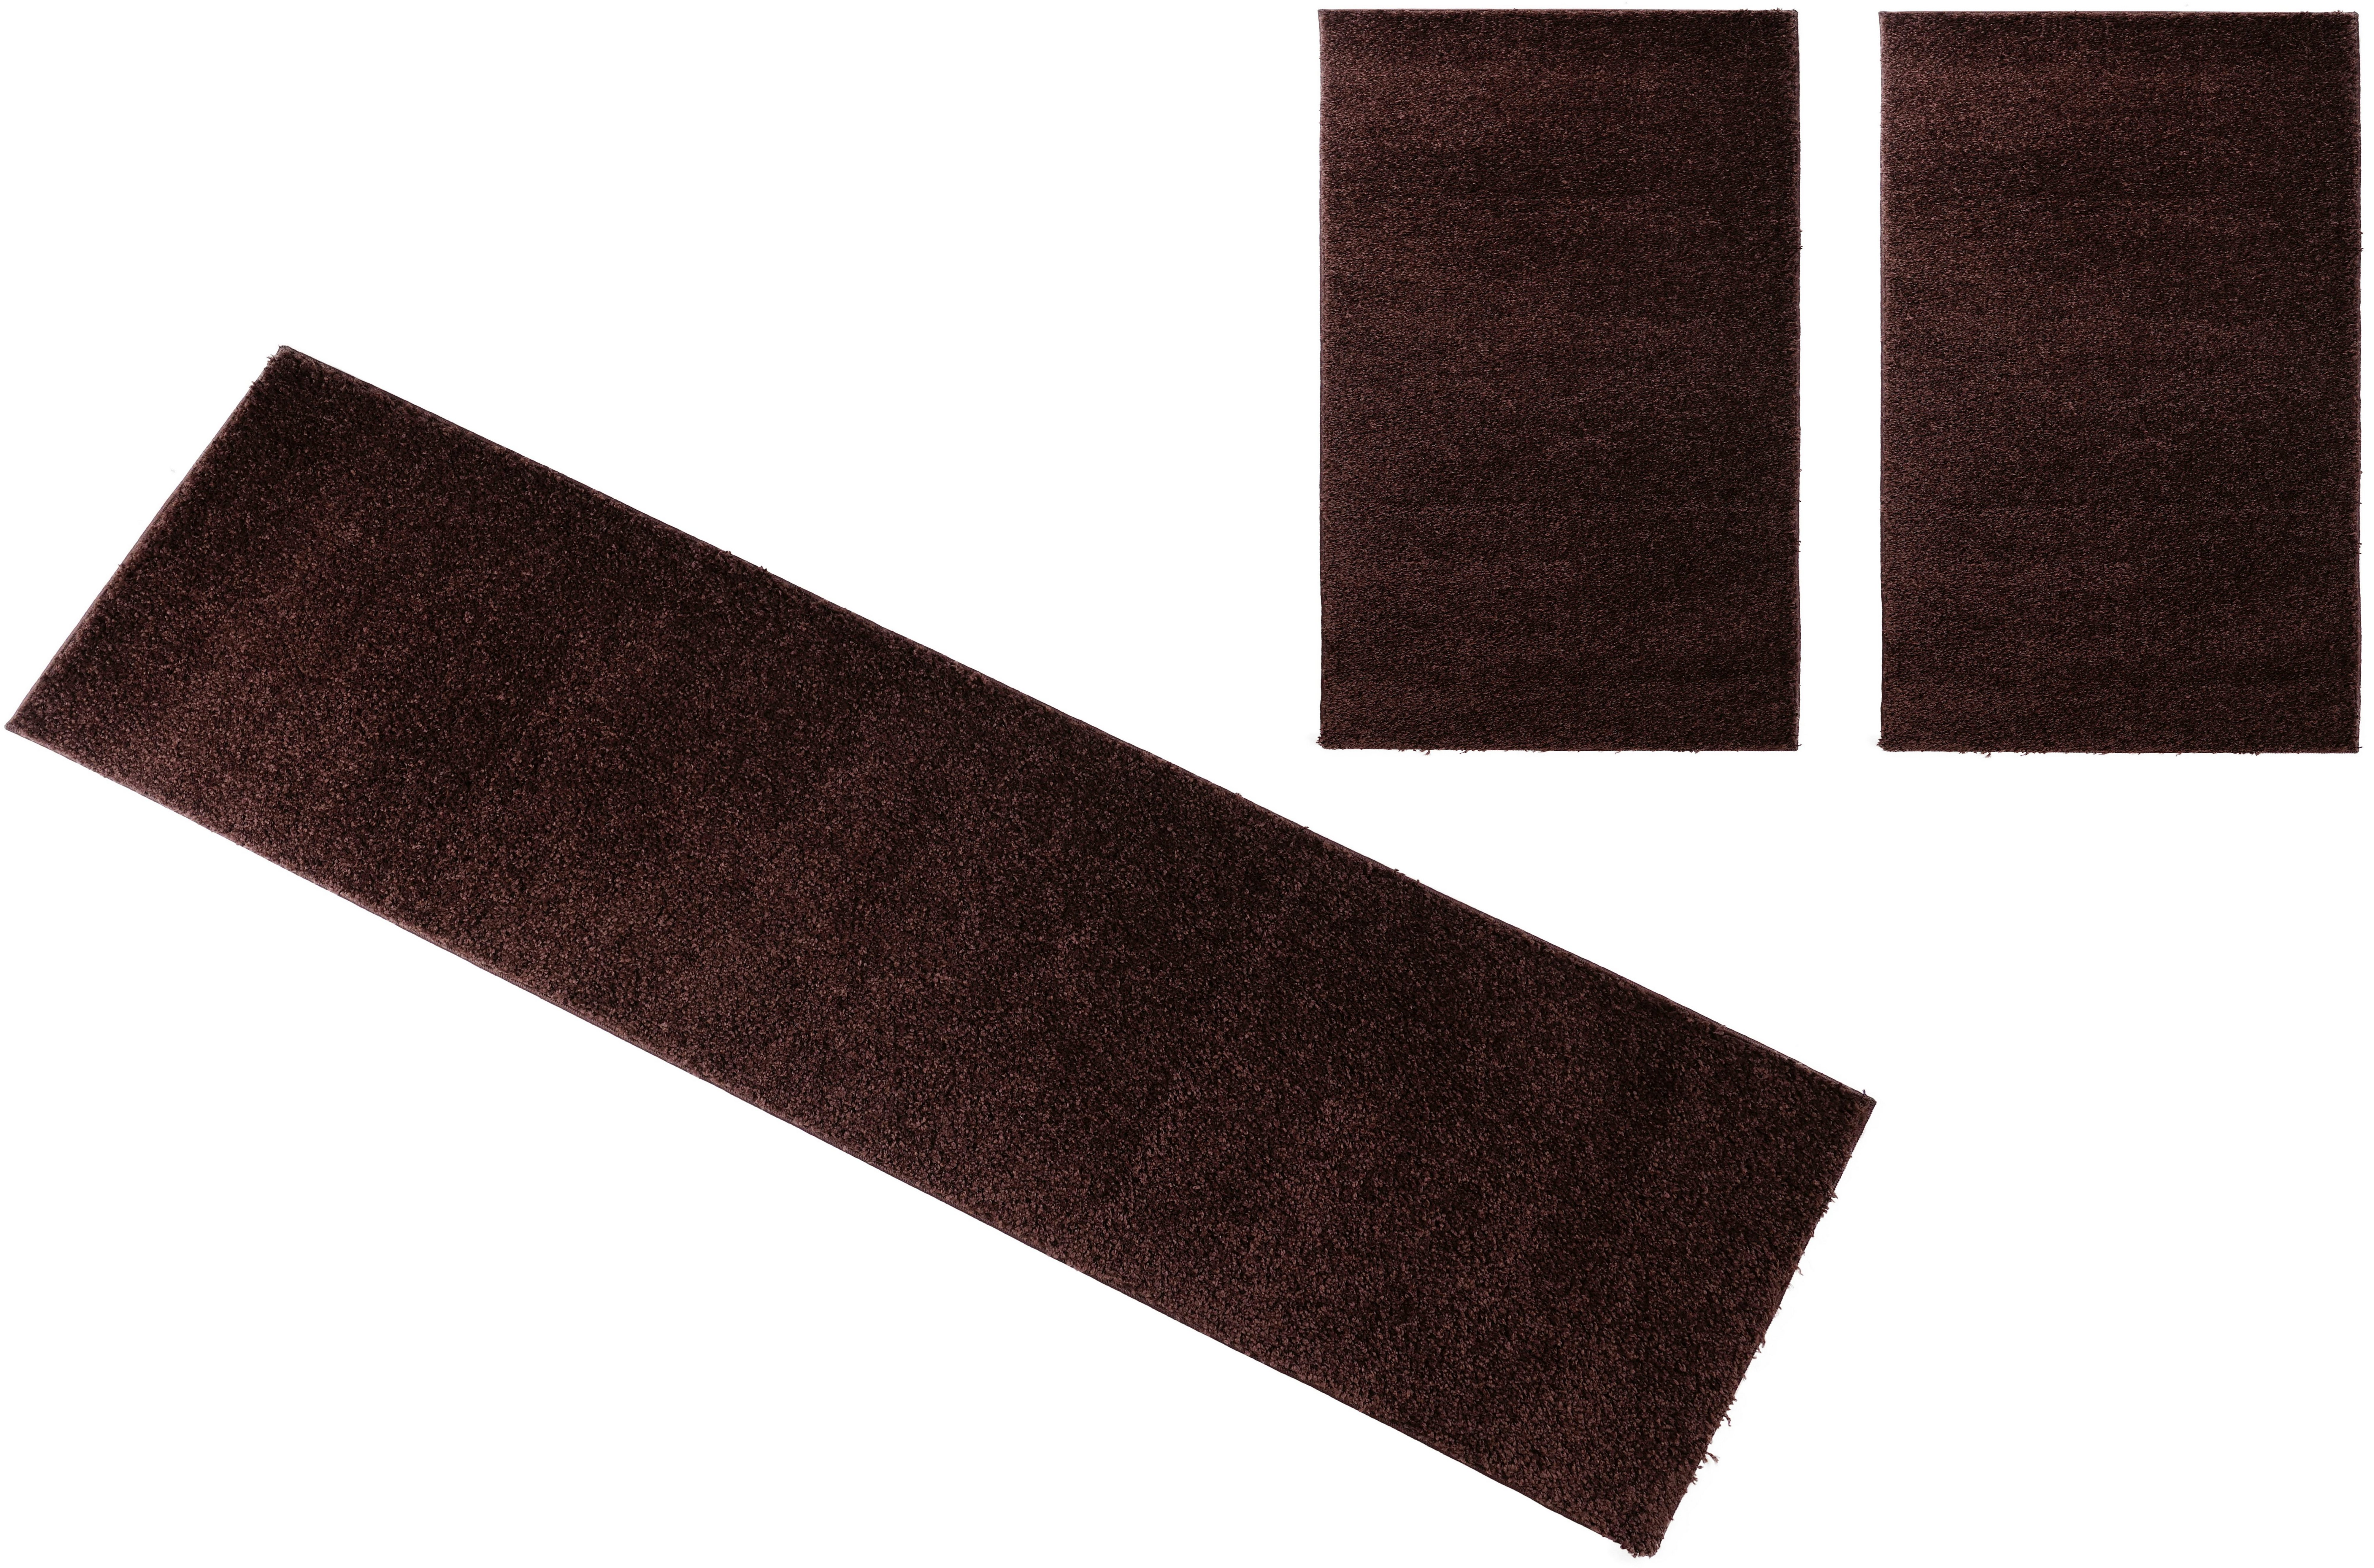 Bettumrandung Shaggy Soft Bruno Banani, Höhe 30 mm, (3-tlg), gewebt, Uni-Farben, besonders weich, Bettvorleger, Läufer-Set dunkelbraun